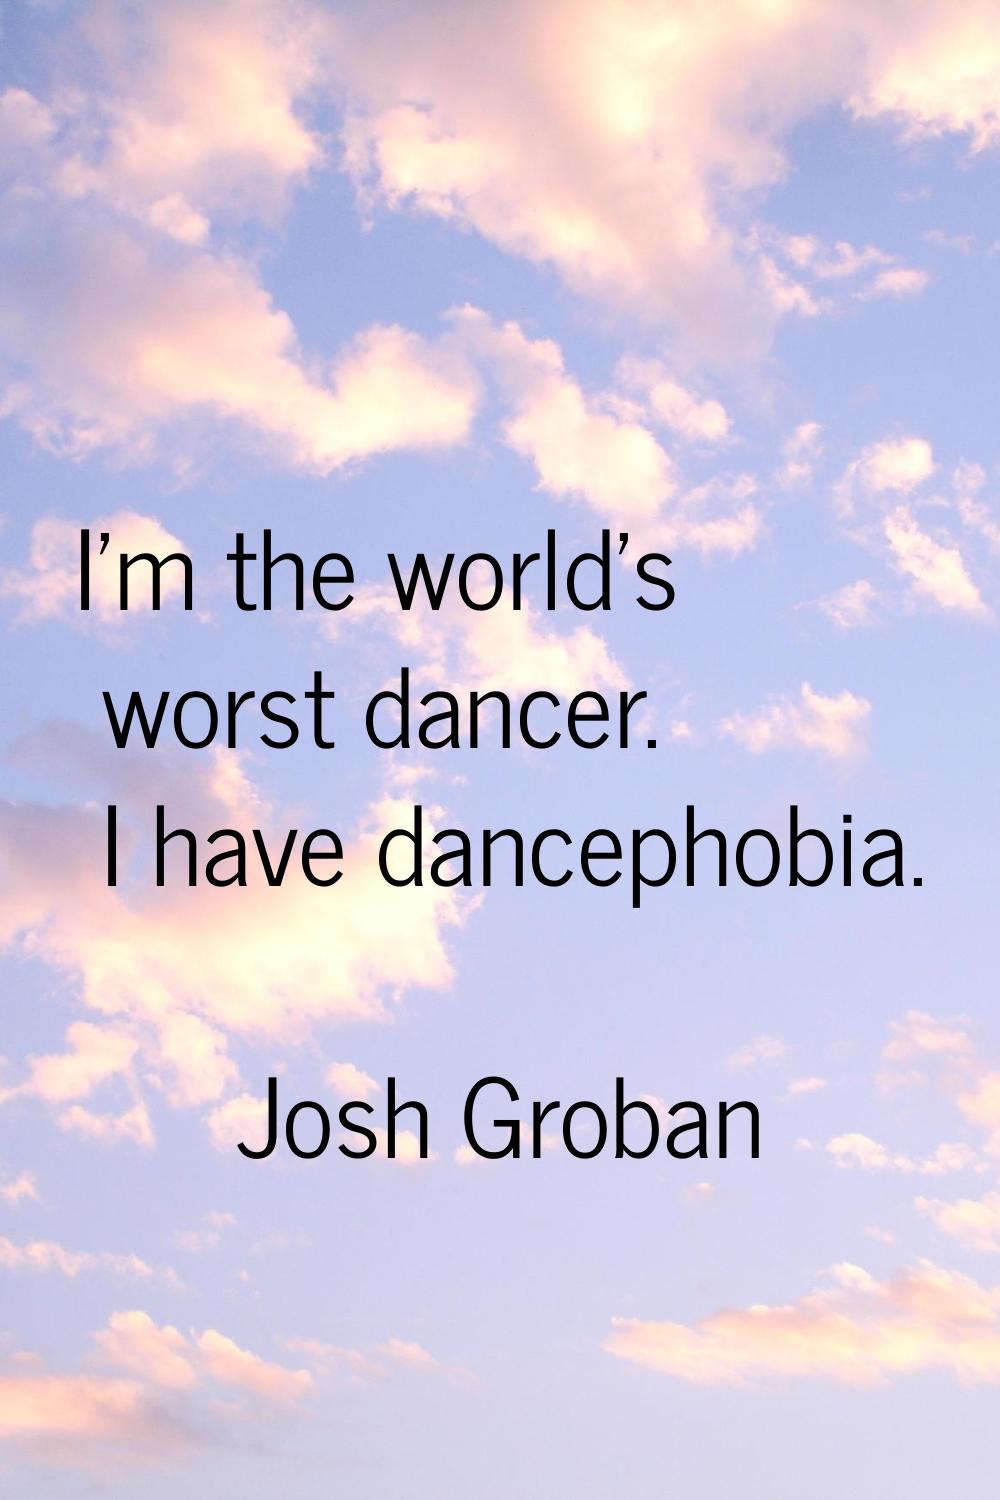 I'm the world's worst dancer. I have dancephobia.